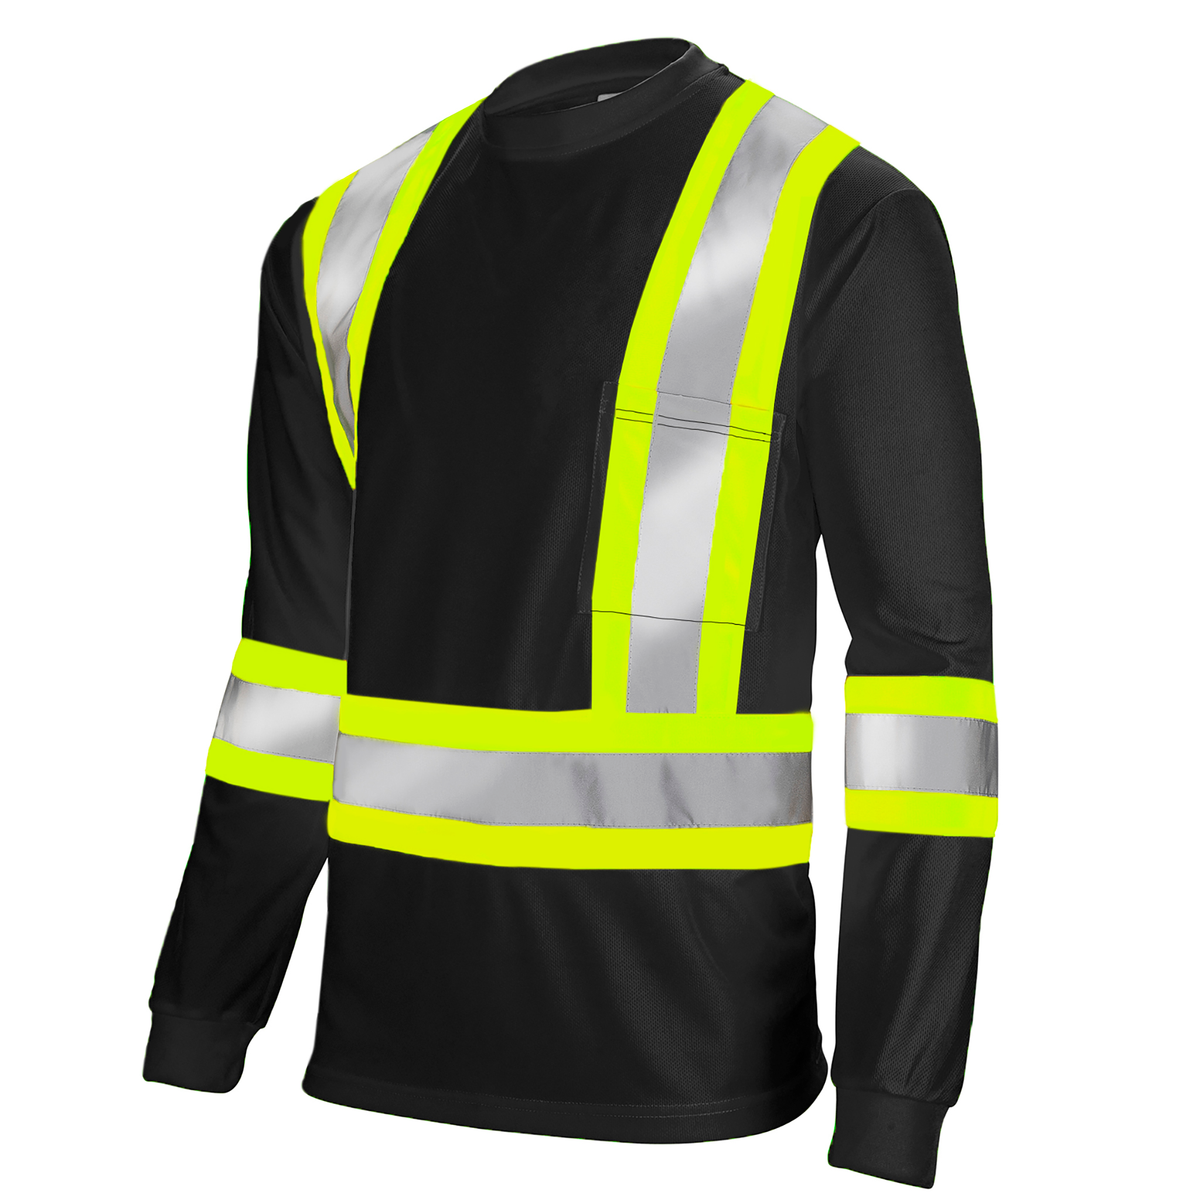 Hi-Vis Reflective Dirt-Concealing Safety Long Sleeve Shirt